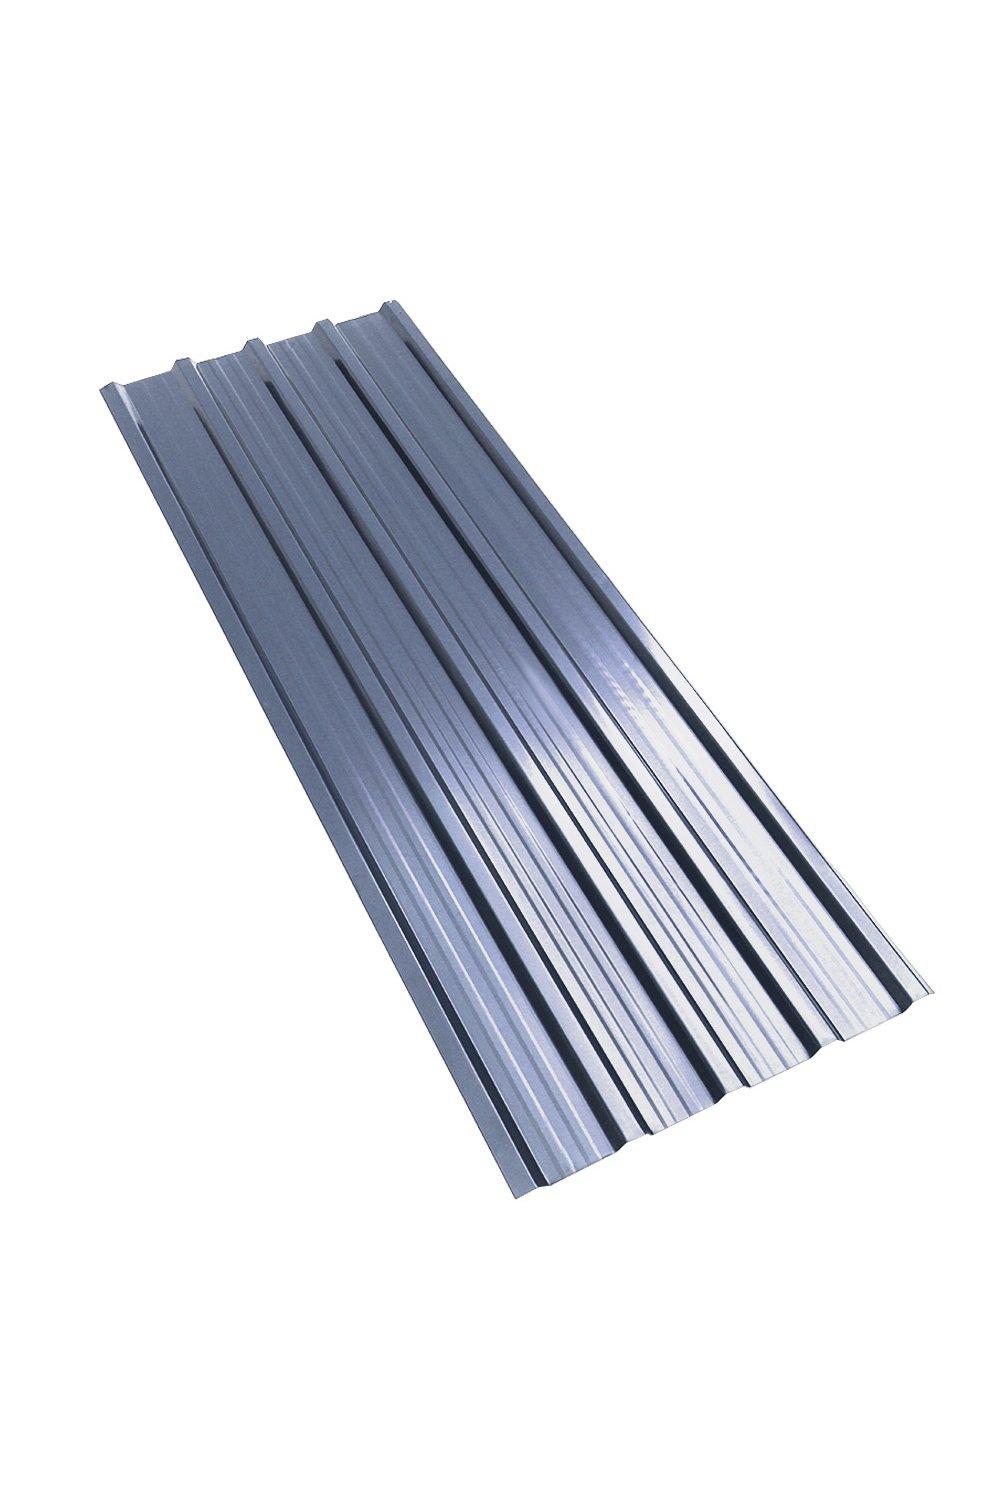 Set of 12 Steel Corrugated Panels